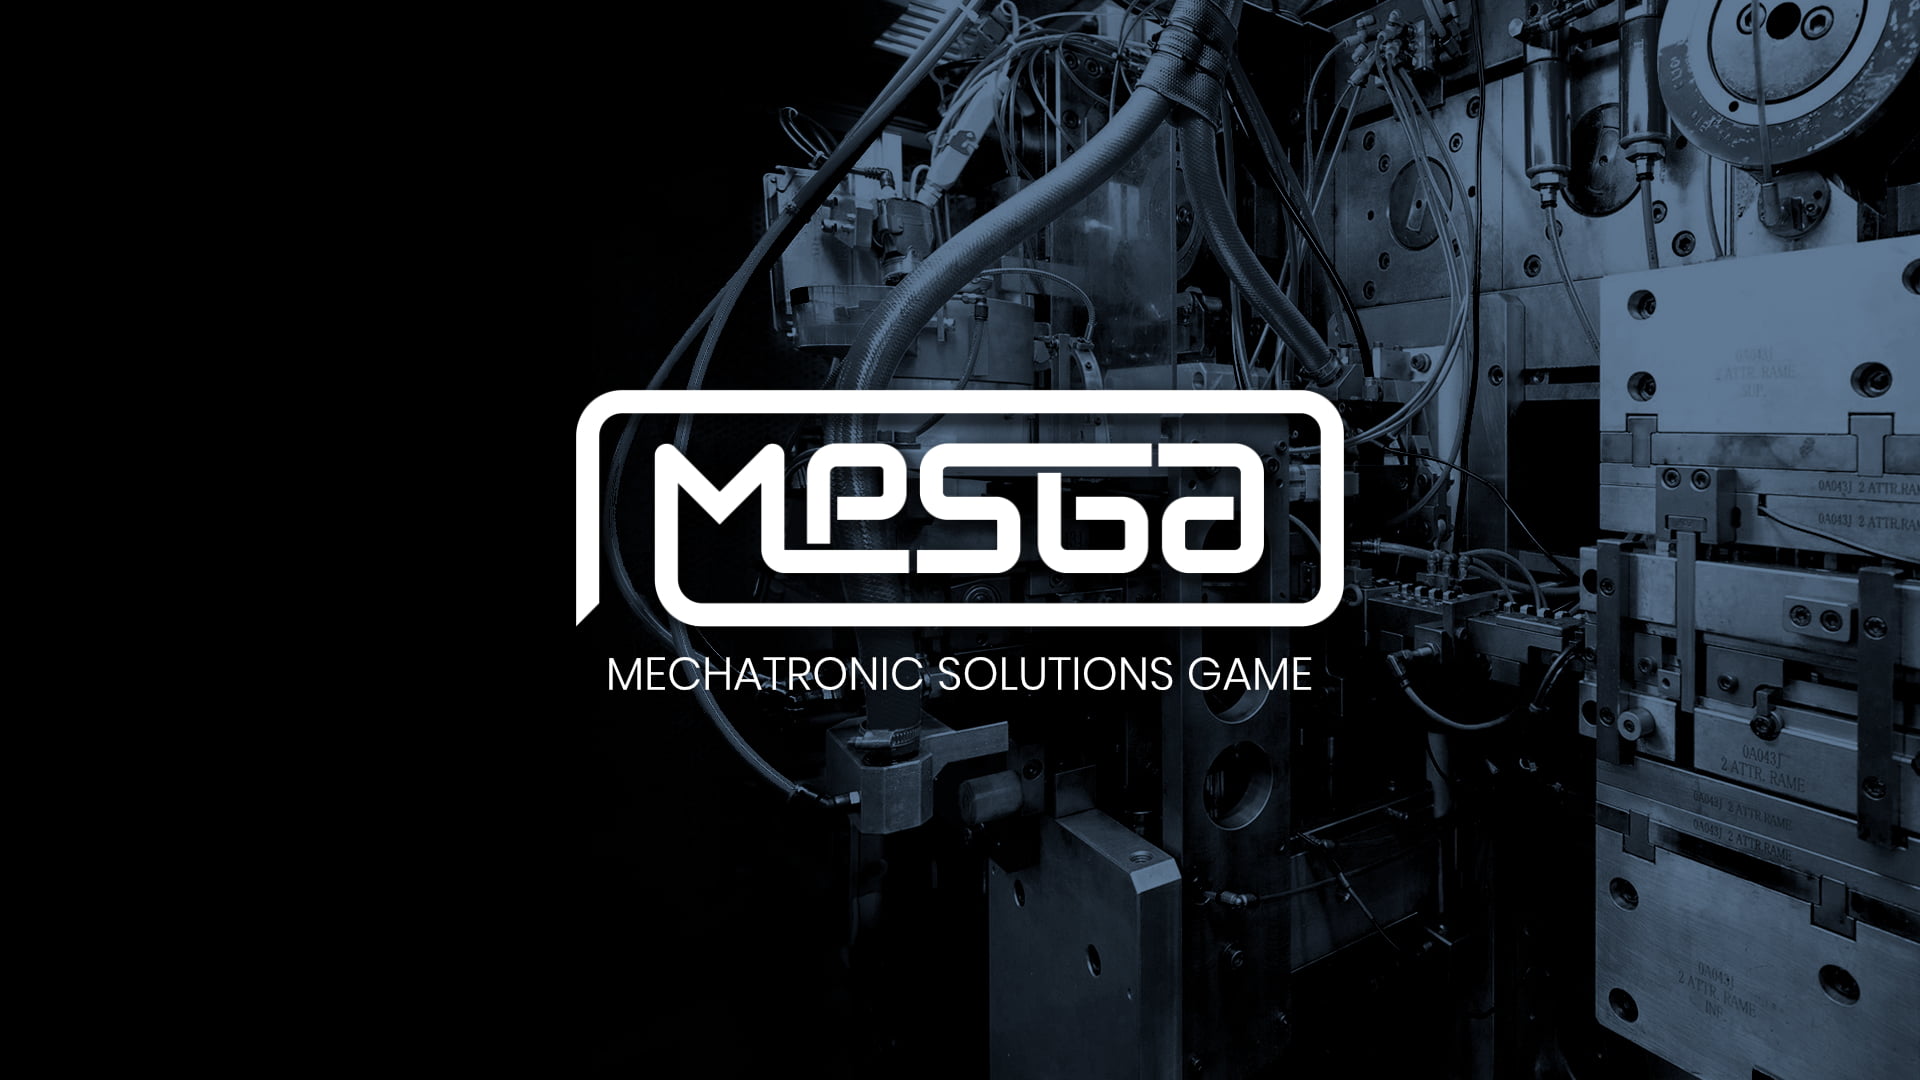 MESGA - Mechatronic Solutions Game